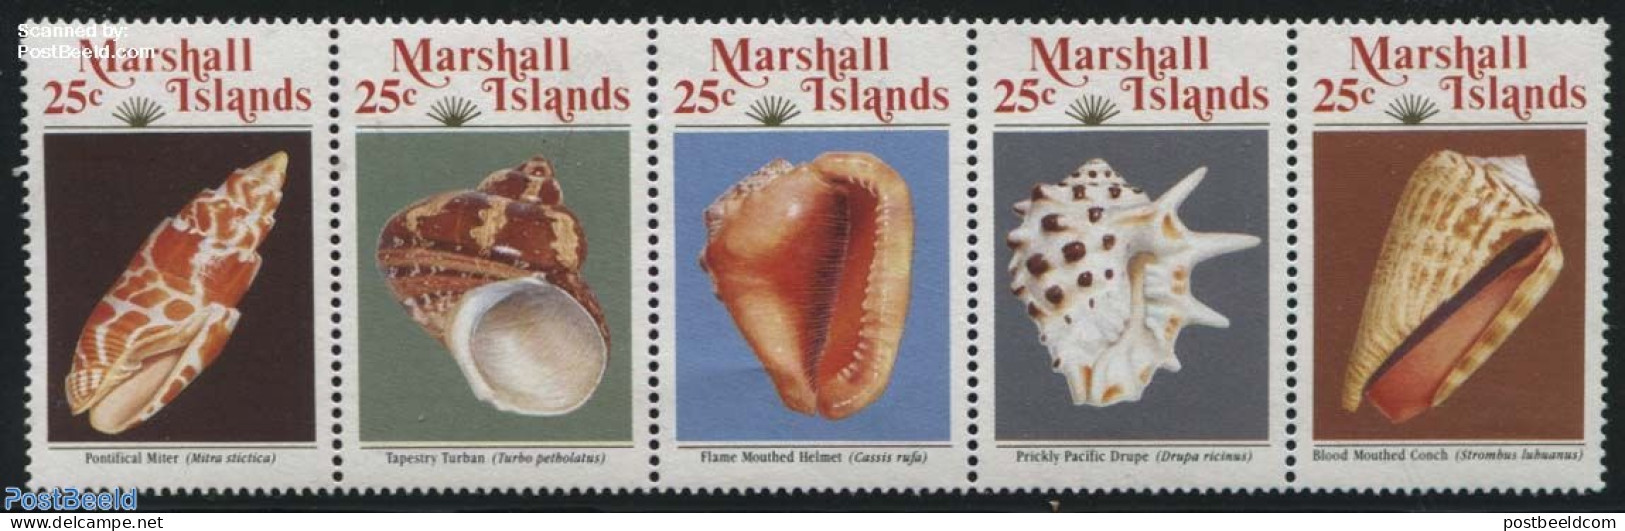 Marshall Islands 1989 Shells 5v [::::], Mint NH, Nature - Shells & Crustaceans - Marine Life